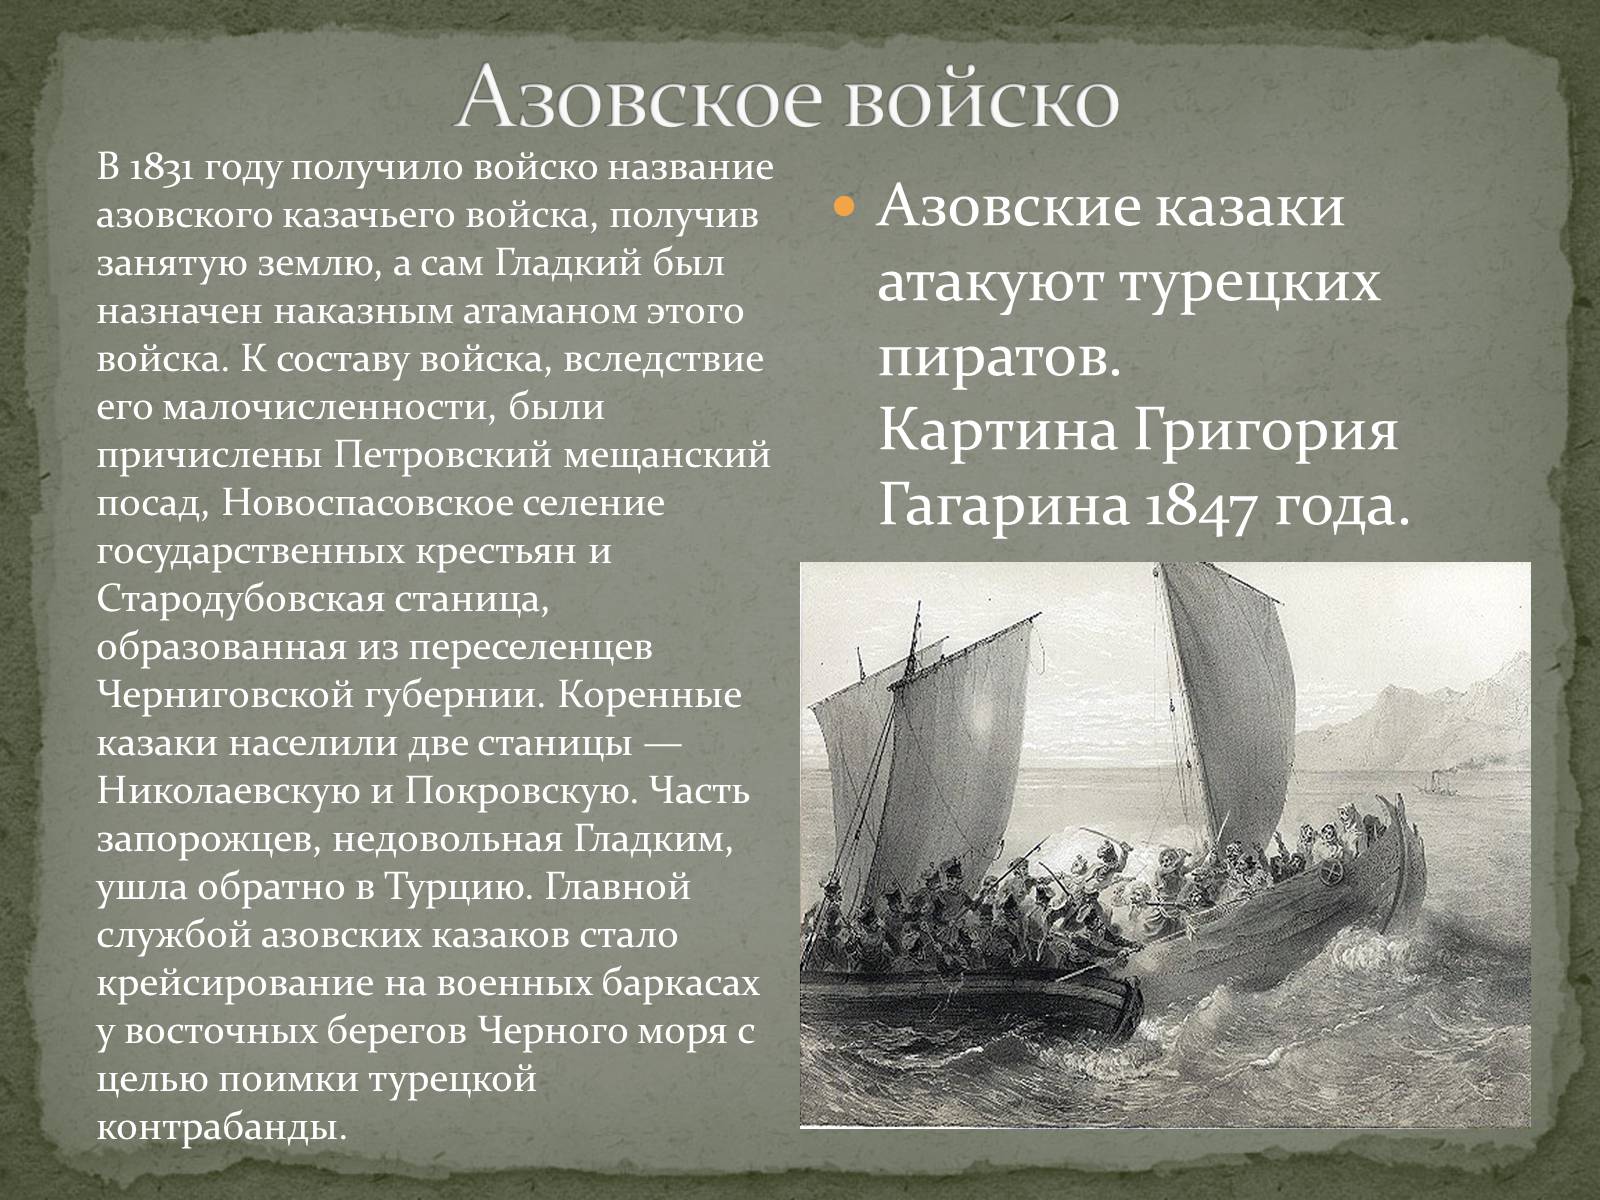 Презентація на тему «Азовское казачье войско» - Слайд #4